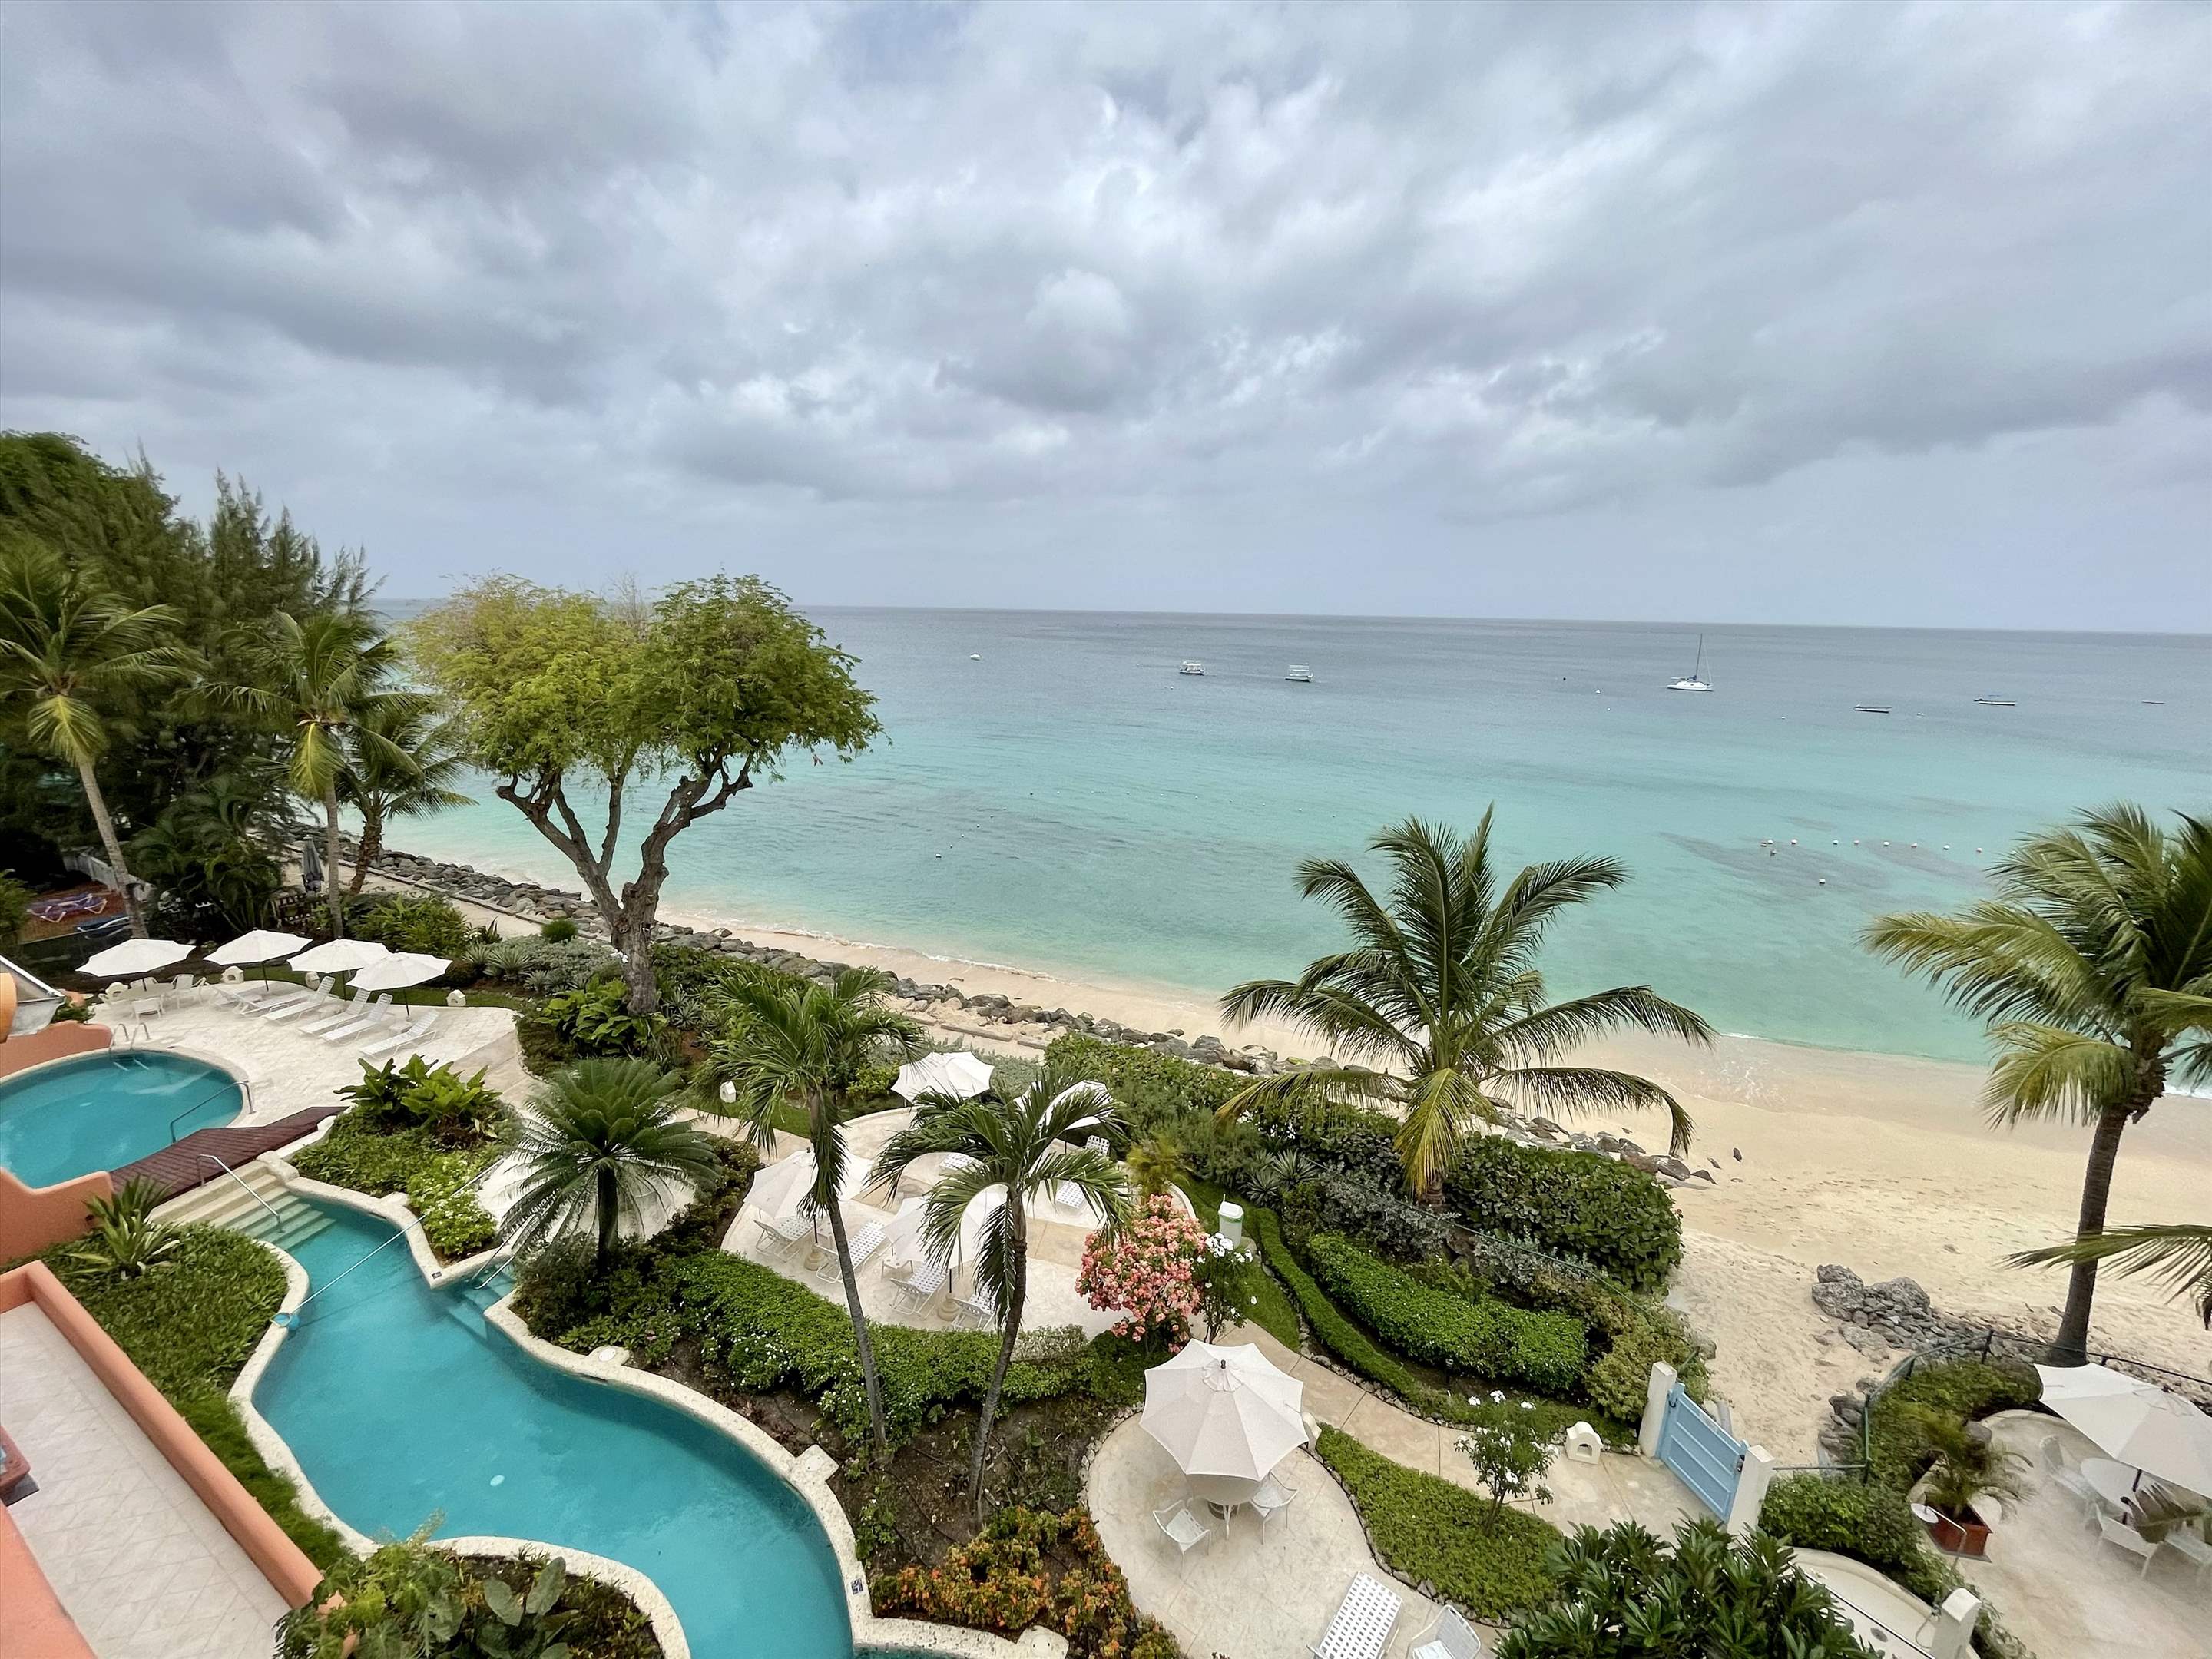 Villas on the Beach 403, 3 bedroom, 3 bedroom apartment in St. James & West Coast, Barbados Photo #22